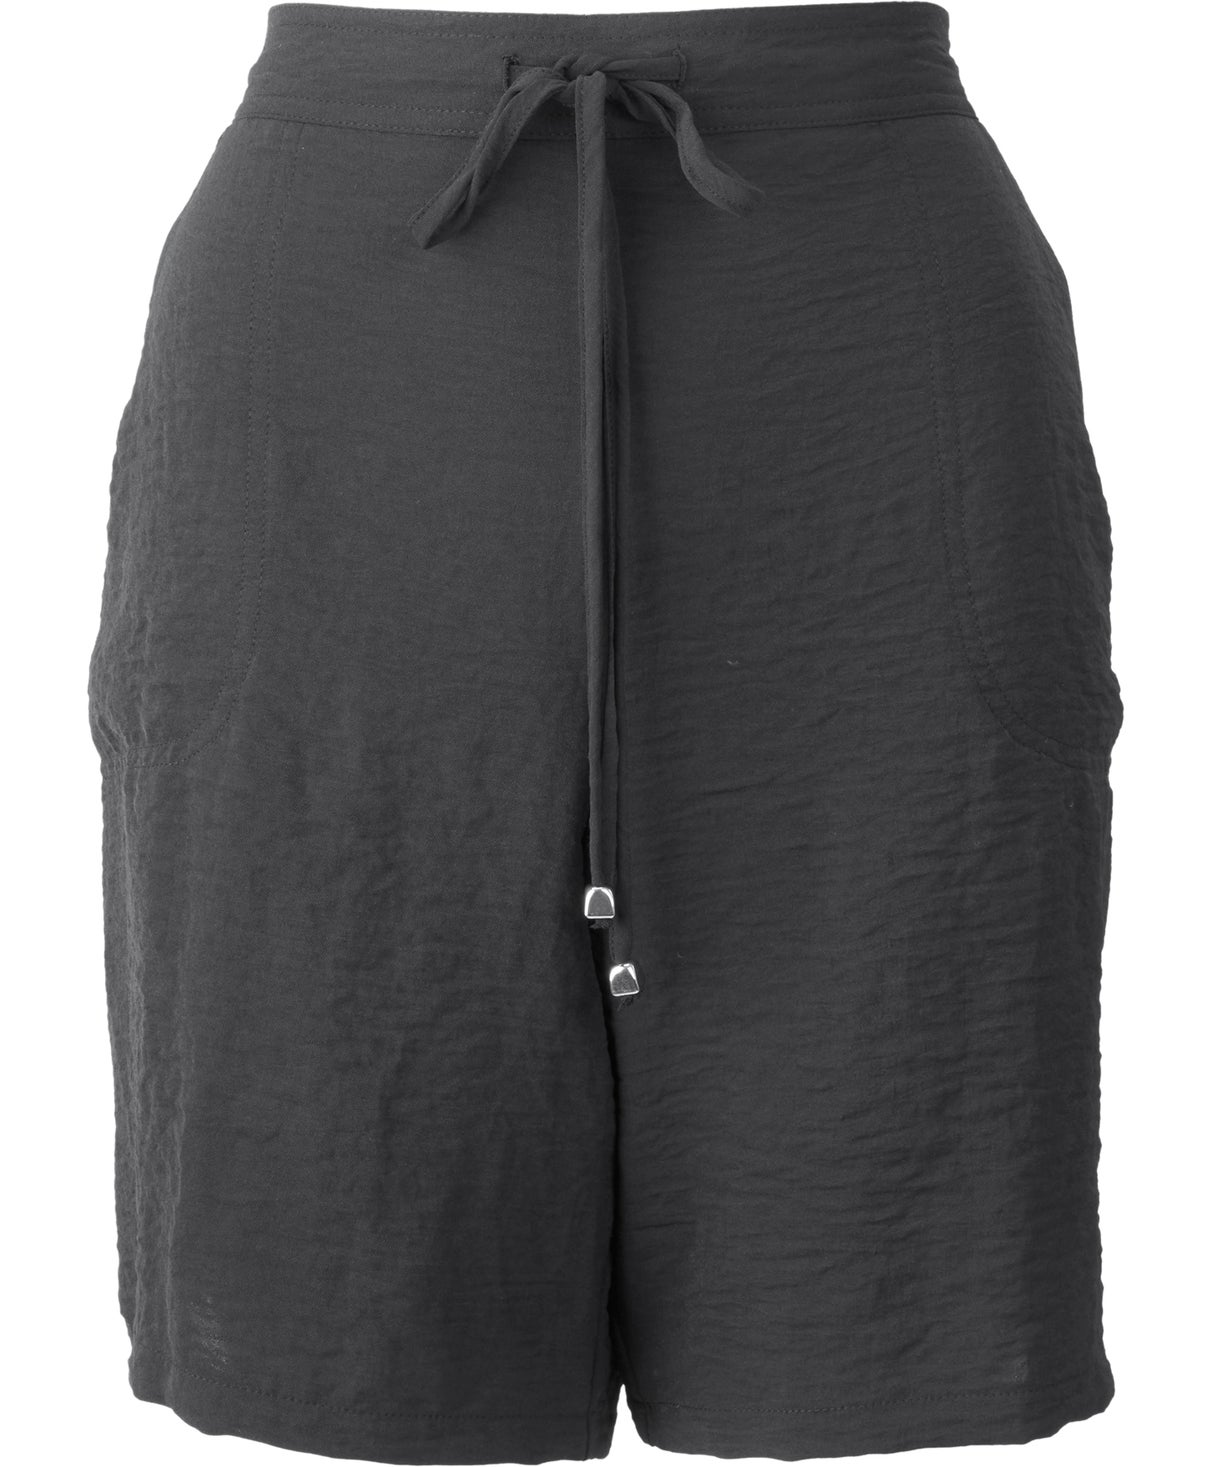 Bermuda Shorts for Women, Knee Length Capris Casual Summer Loose Fit Short  Pants Dressy Drawstring Pirate Shorts Medium 0-black